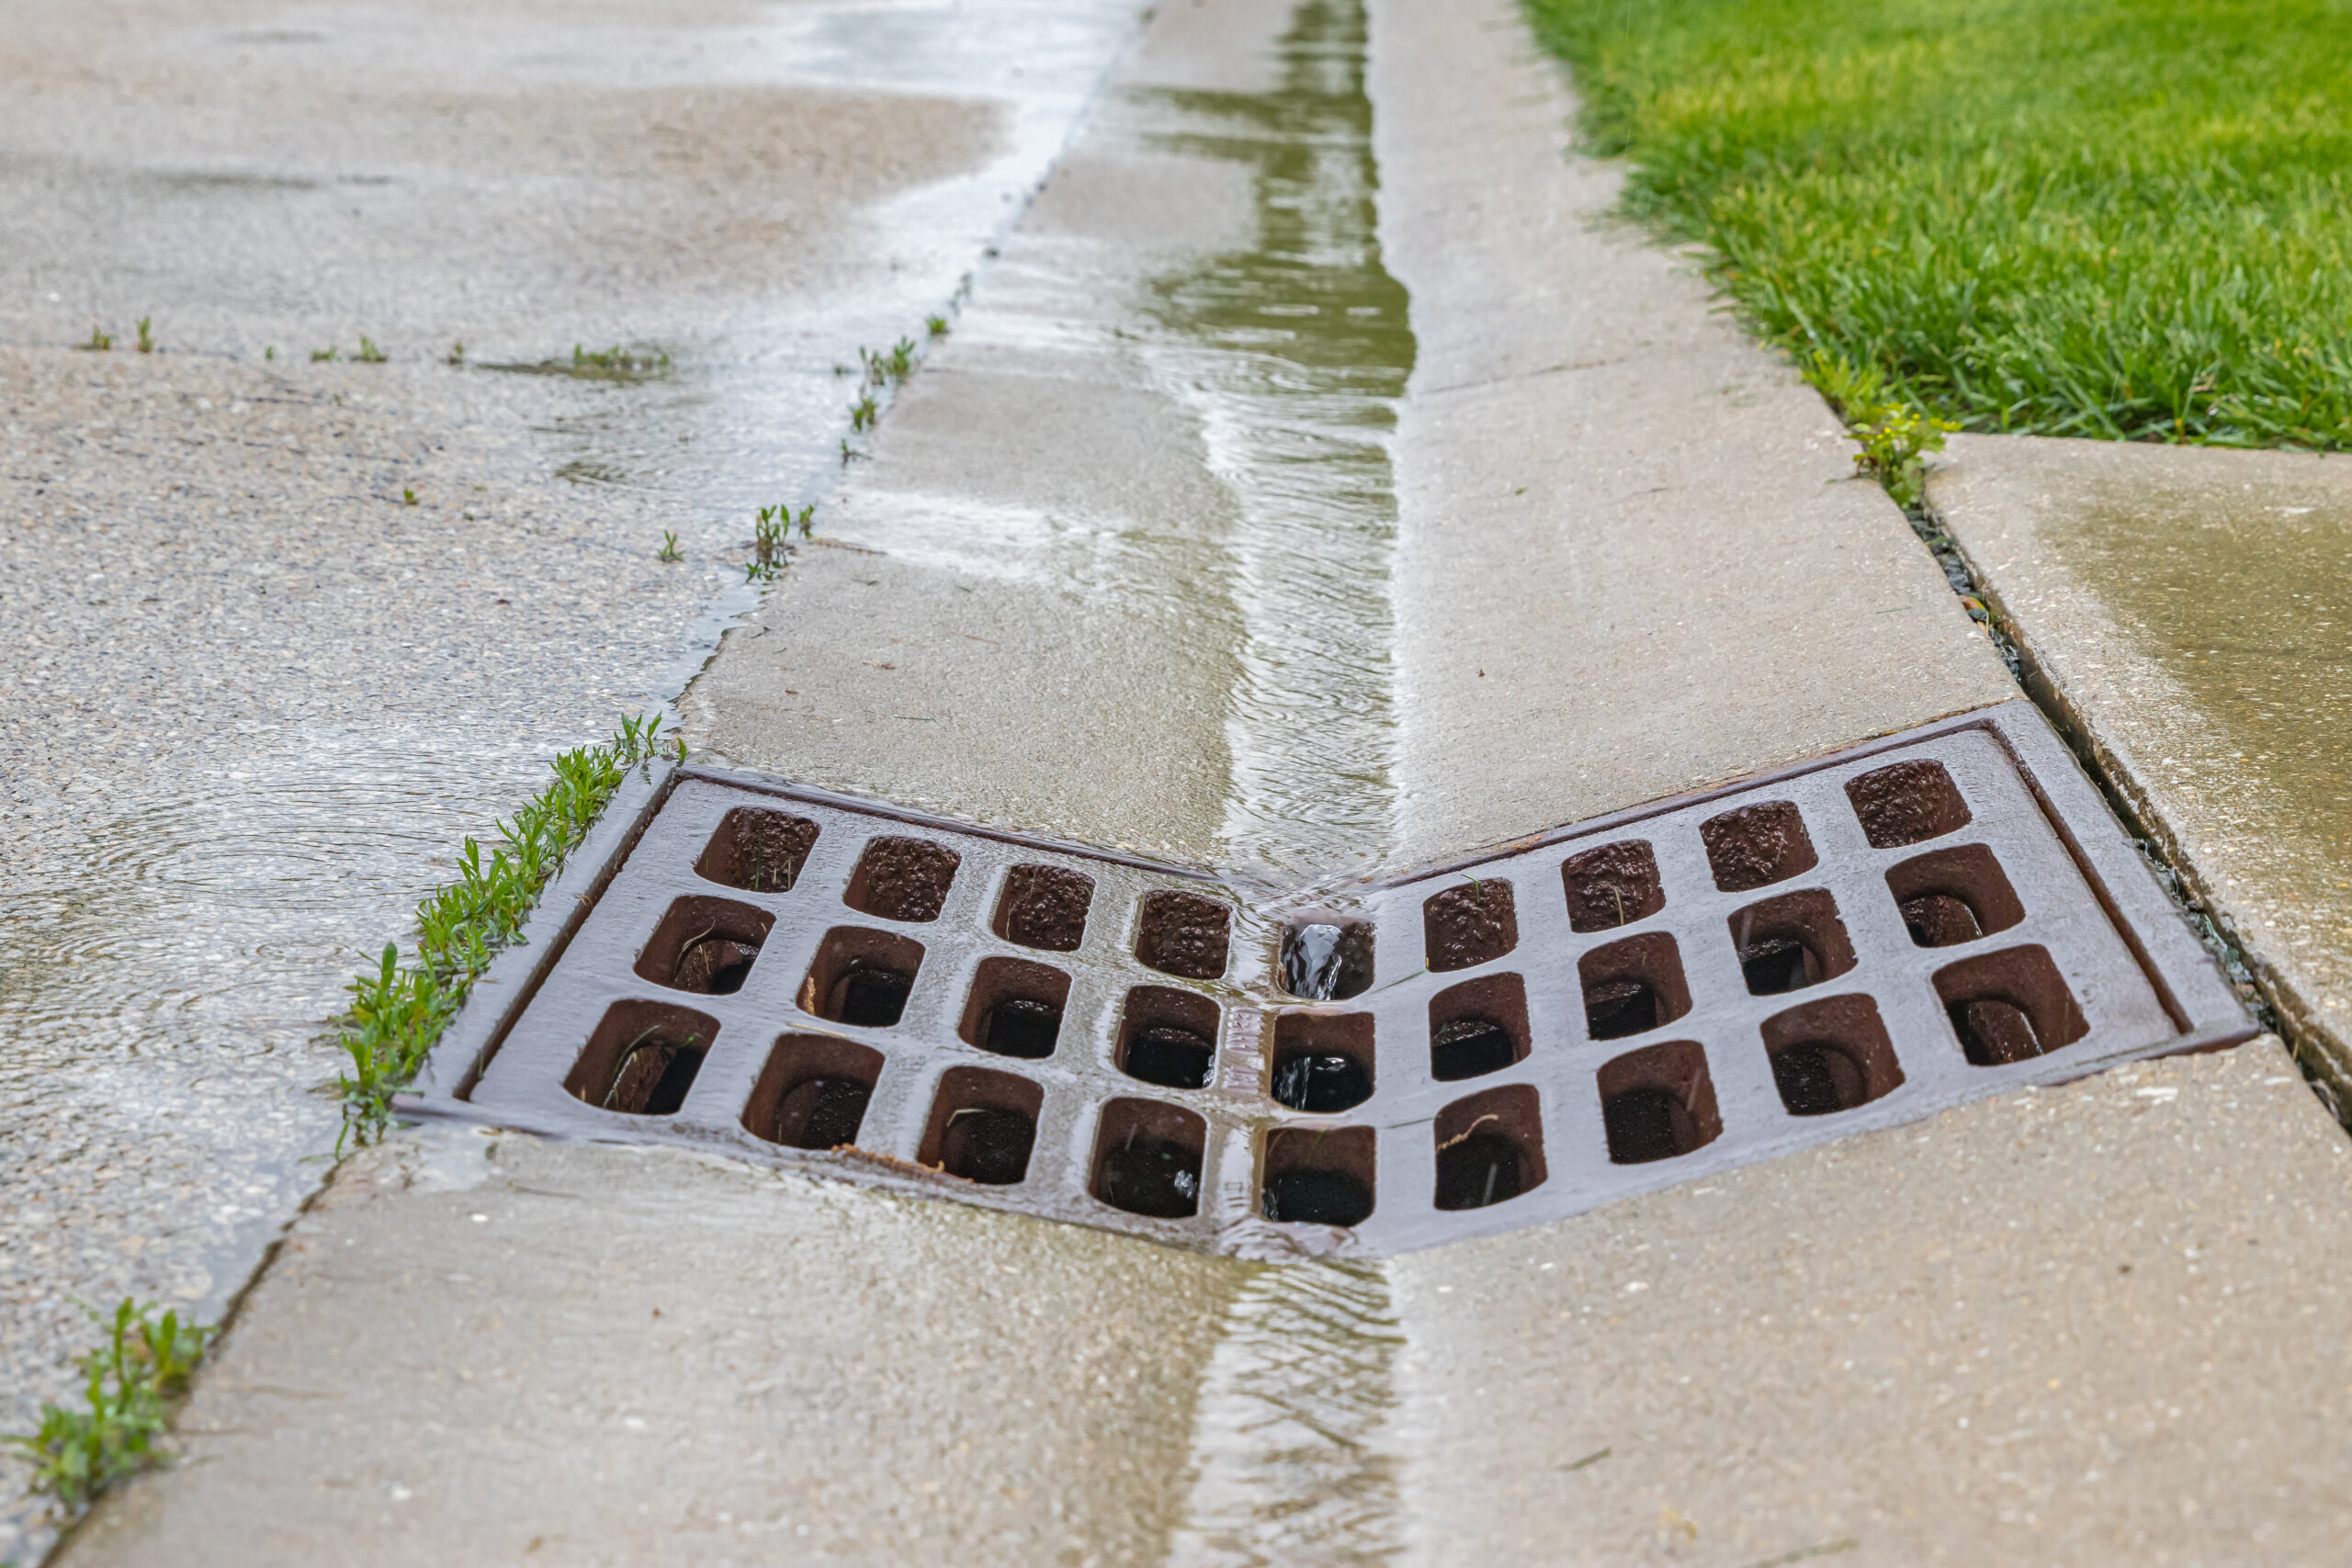 Rain flows through a concrete gutter into a storm sewer system drainage grate